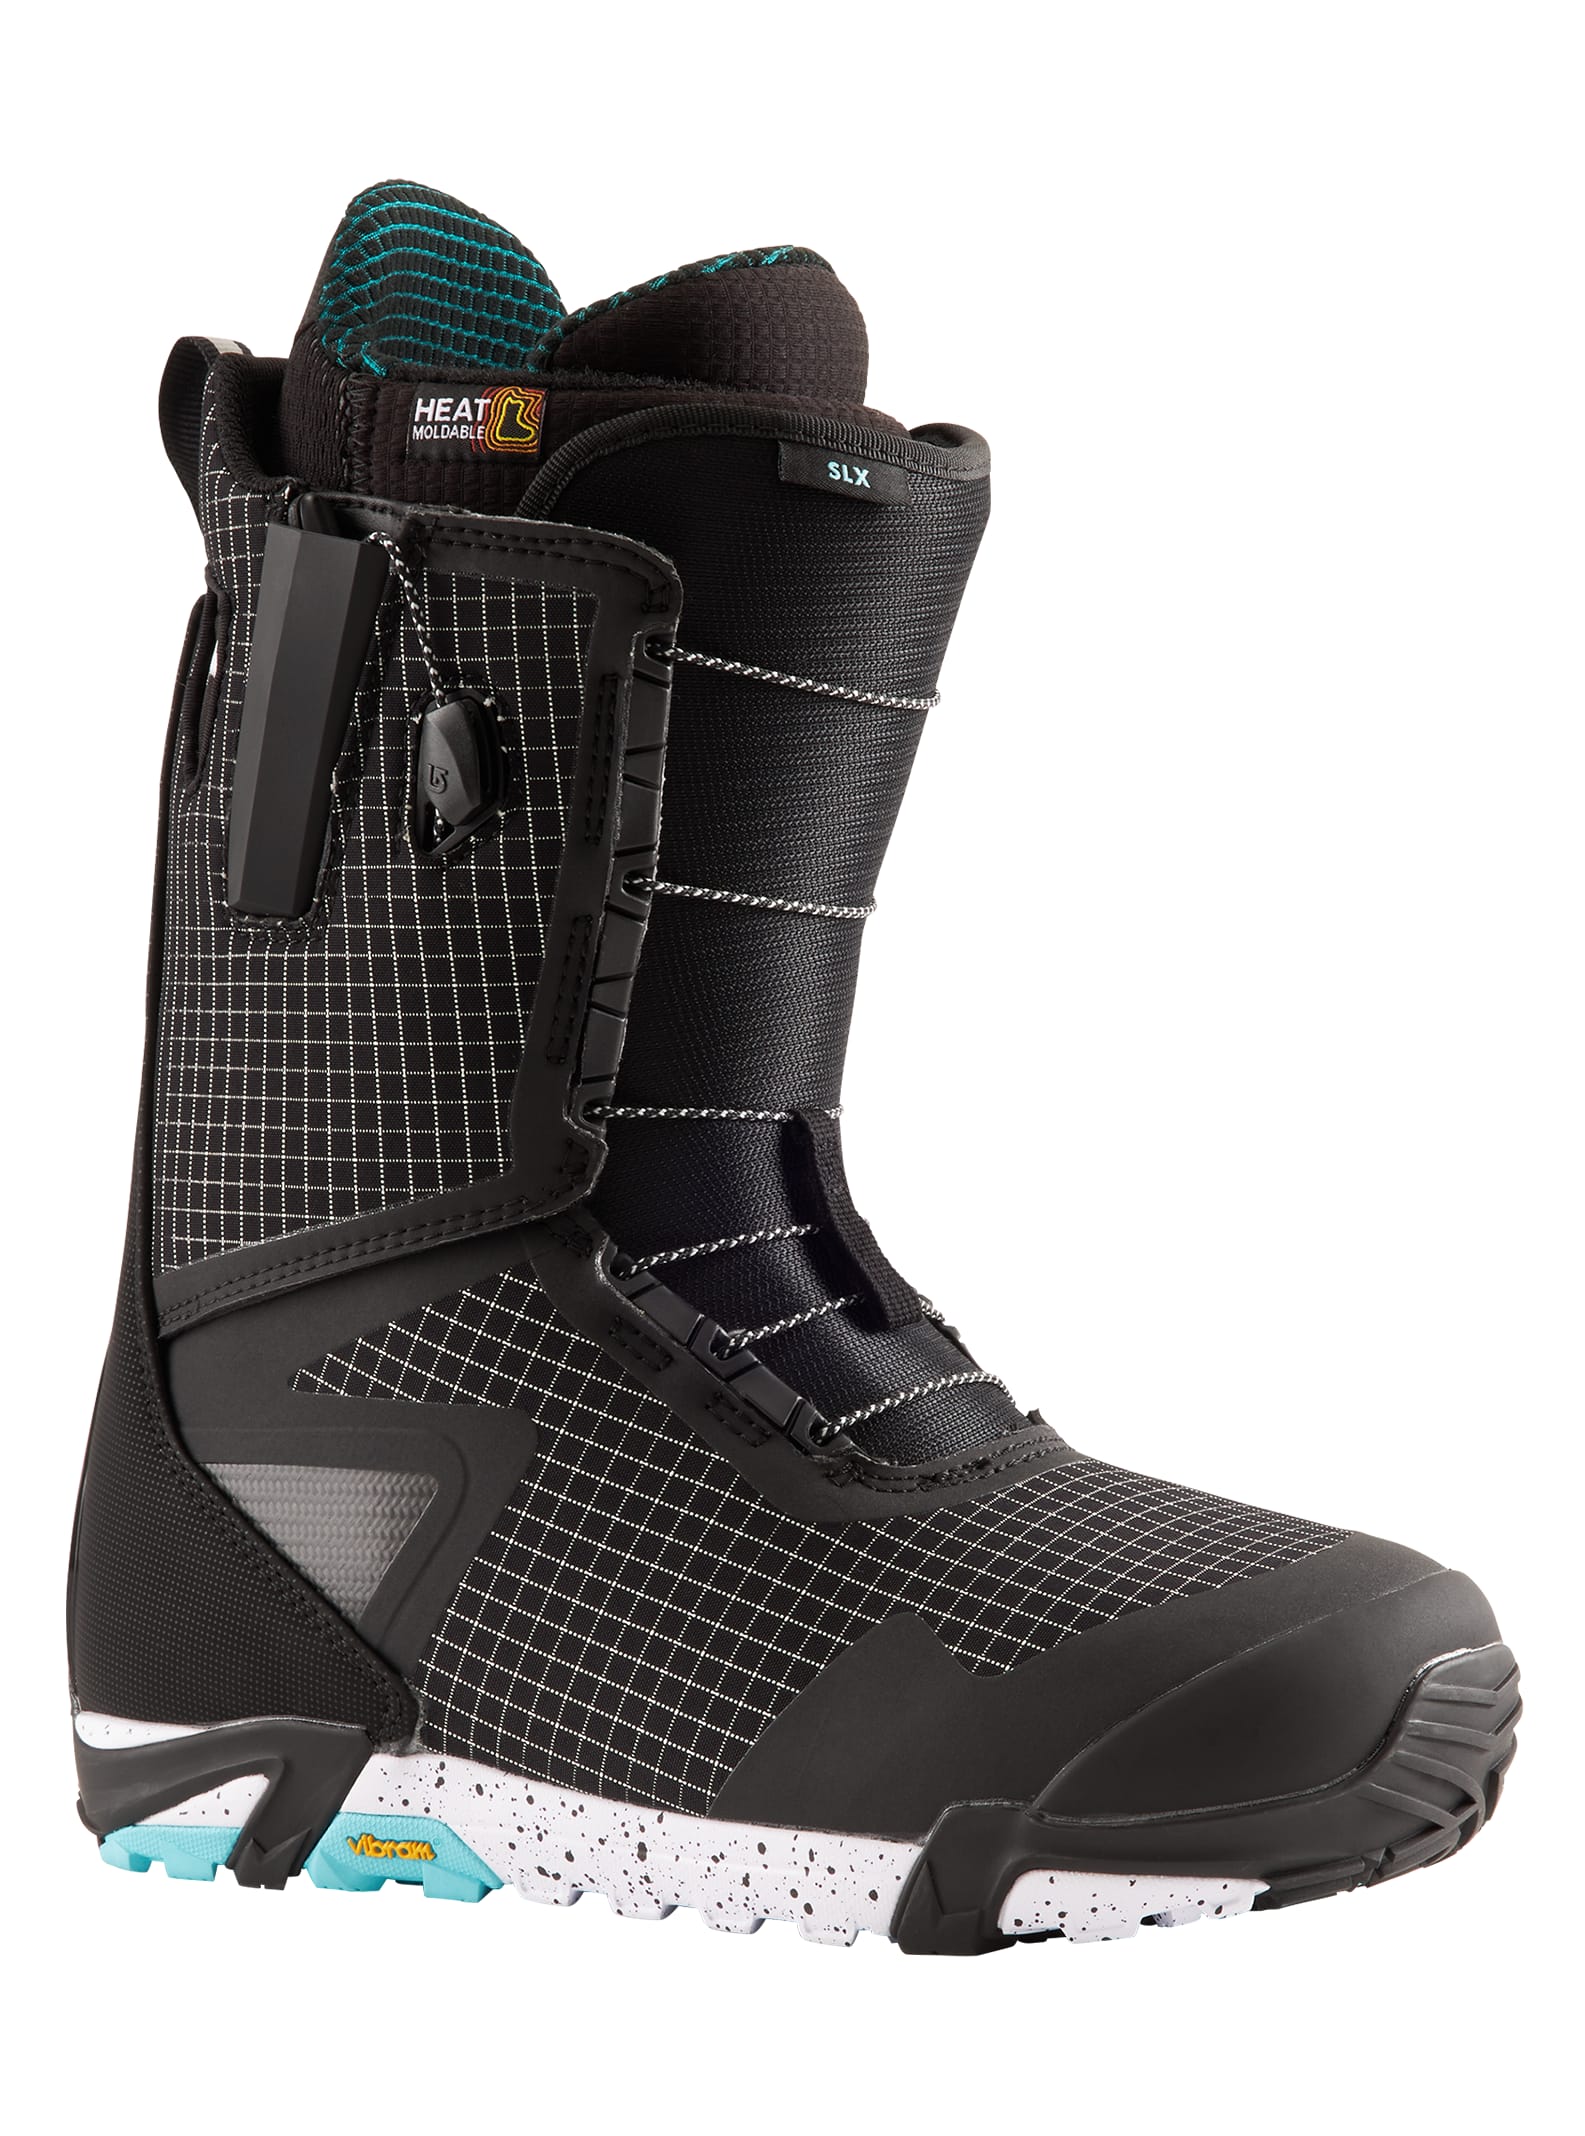 Men's Burton SLX Snowboard Boots | Burton.com Winter 2022 IT